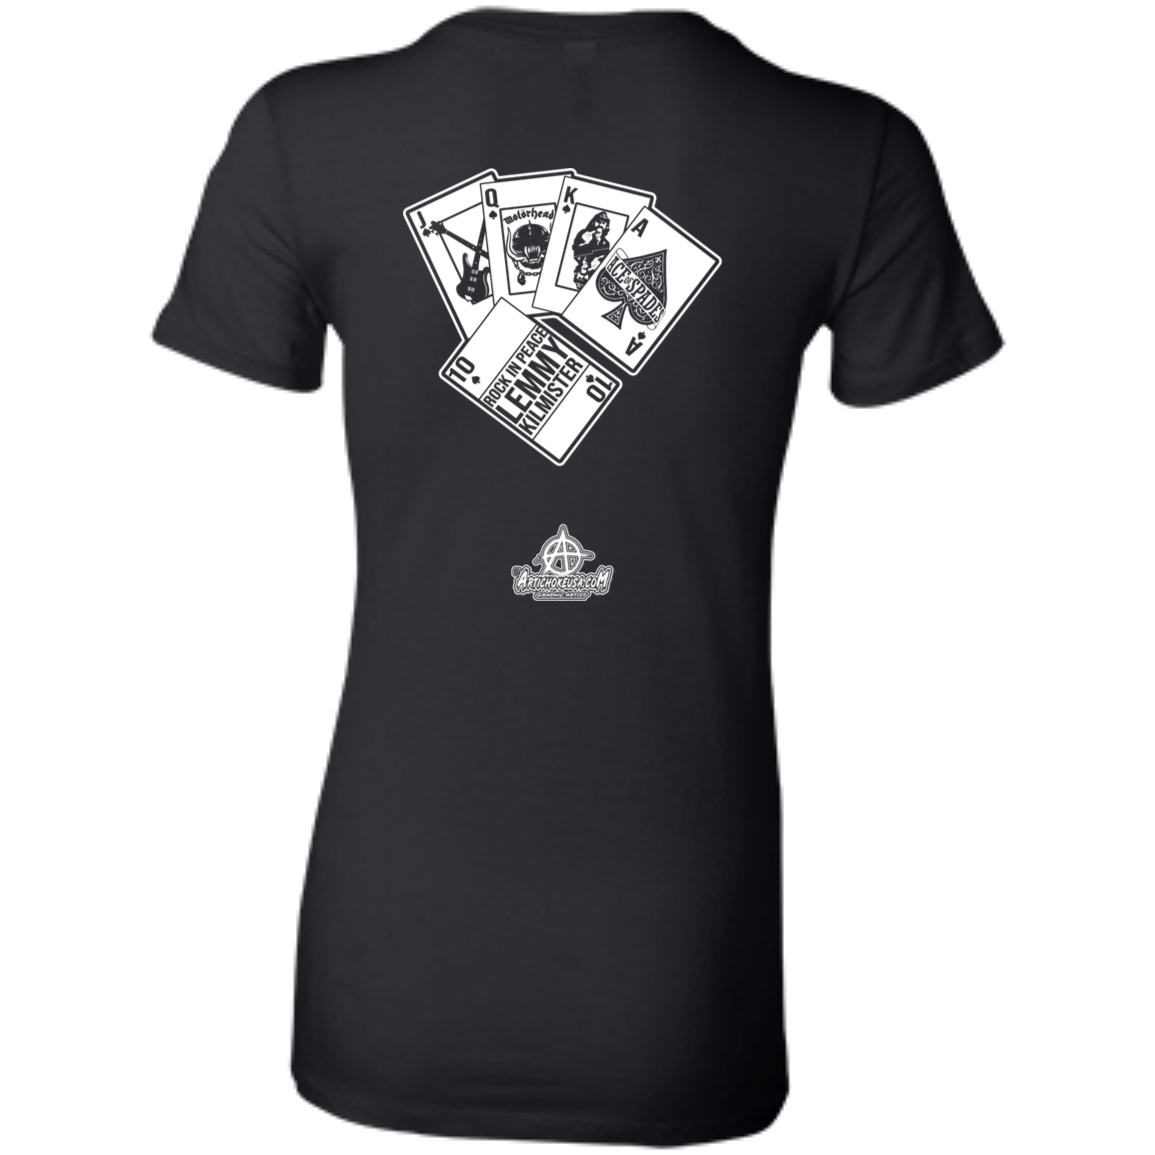 ArtichokeUSA Custom Design. Motorhead's Lemmy Kilmister's Favorite Video Poker Machine. Rock in Peace! Ladies' Favorite T-Shirt